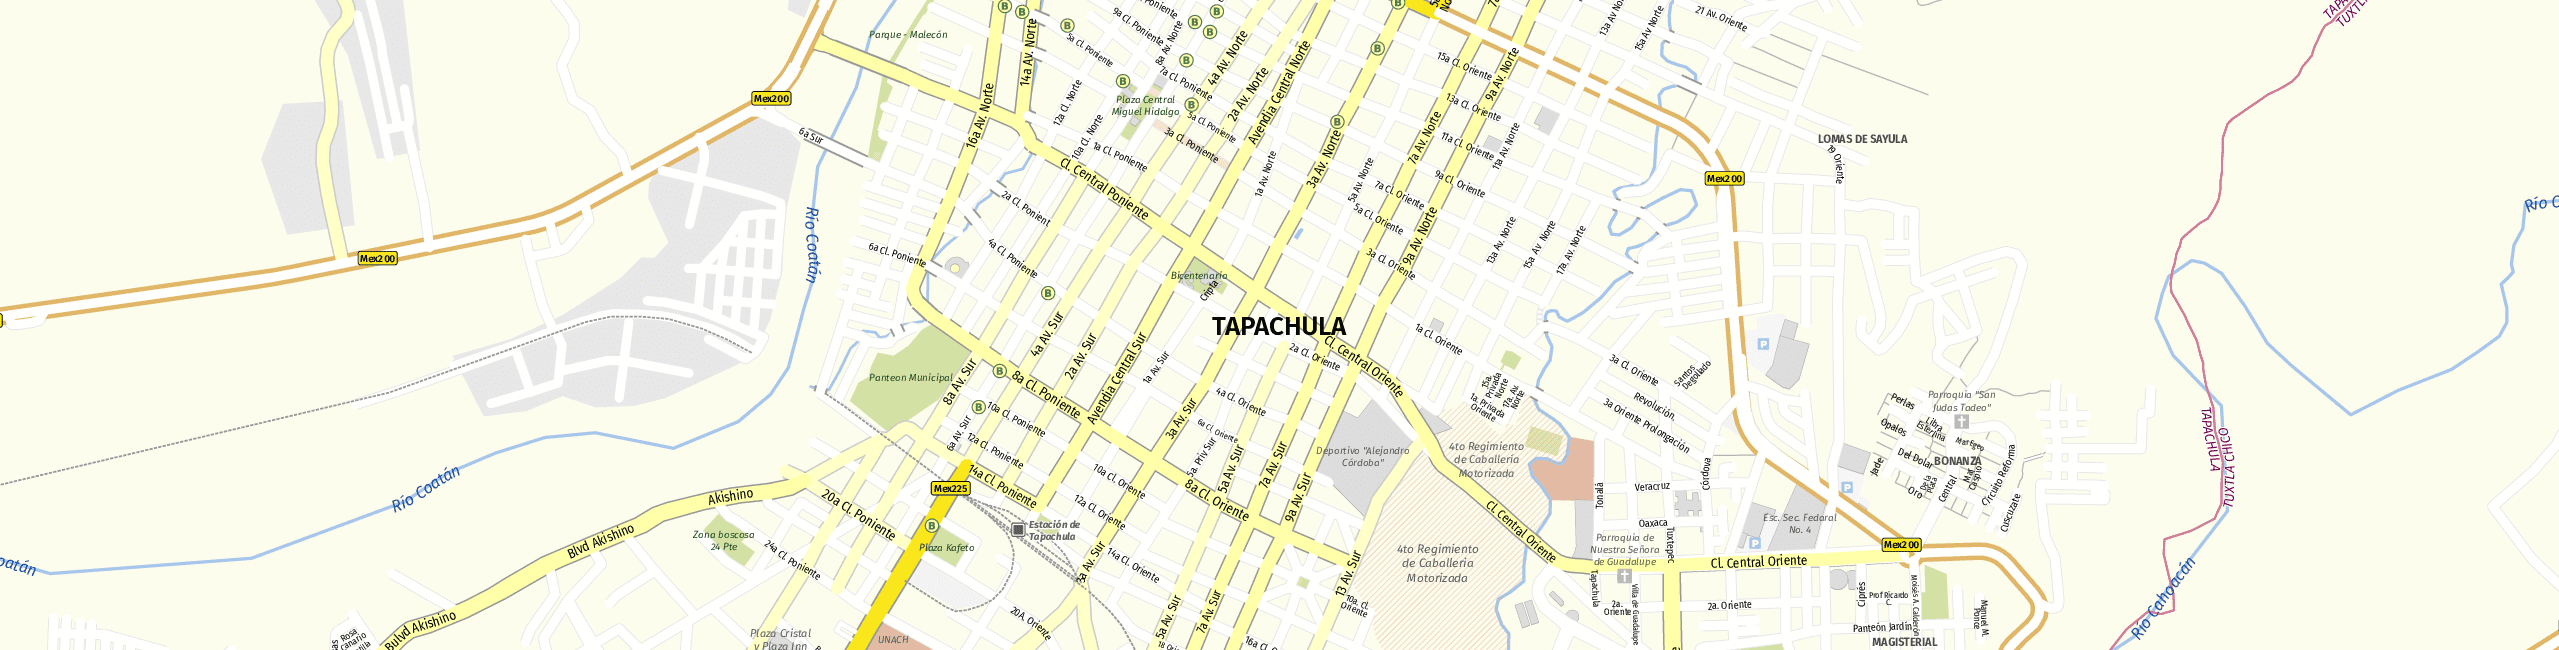 Stadtplan Tapachula zum Downloaden.